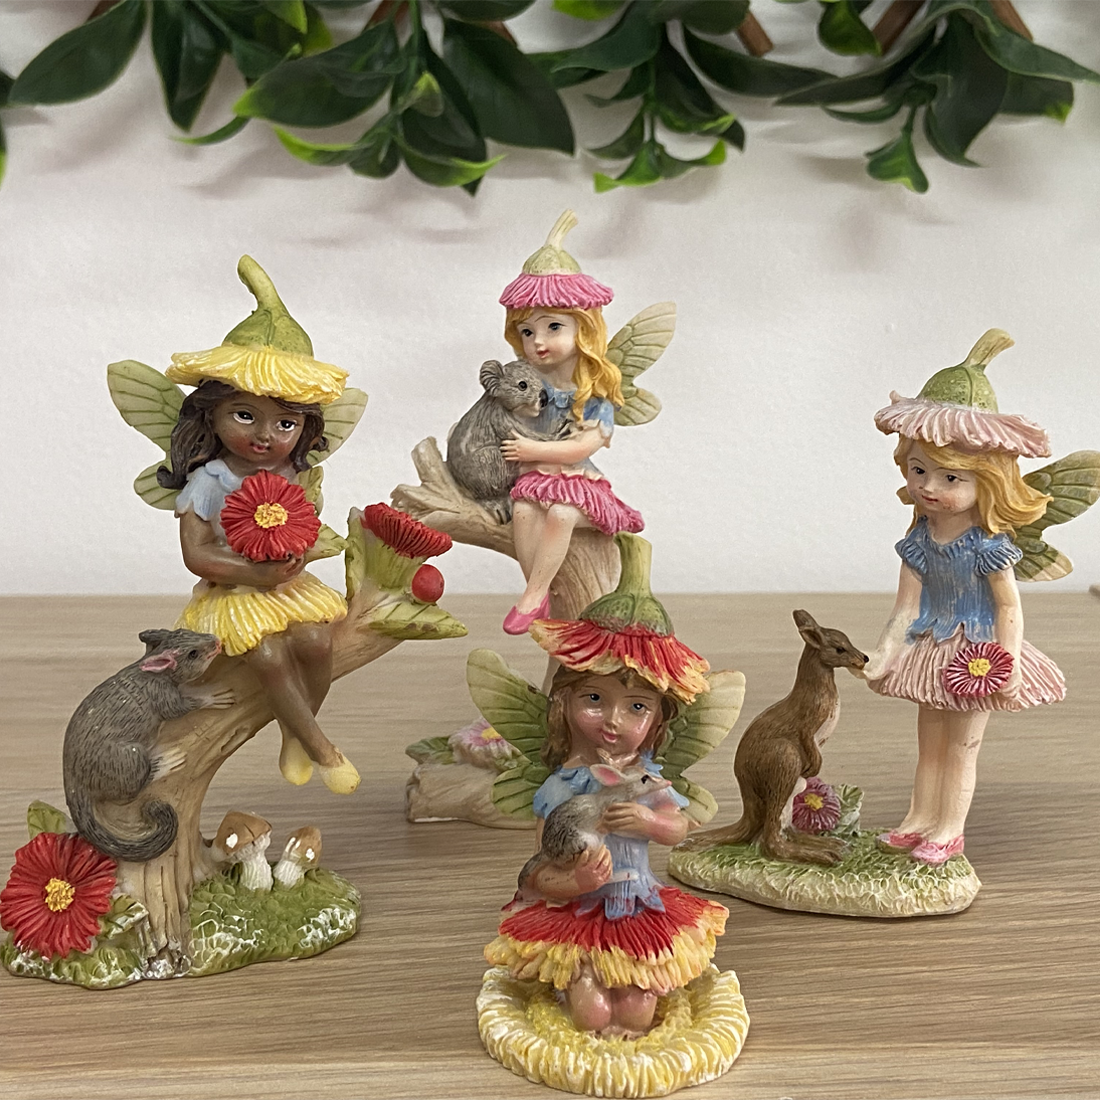 Gum Blossom Fairy with Kangaroo Figurine